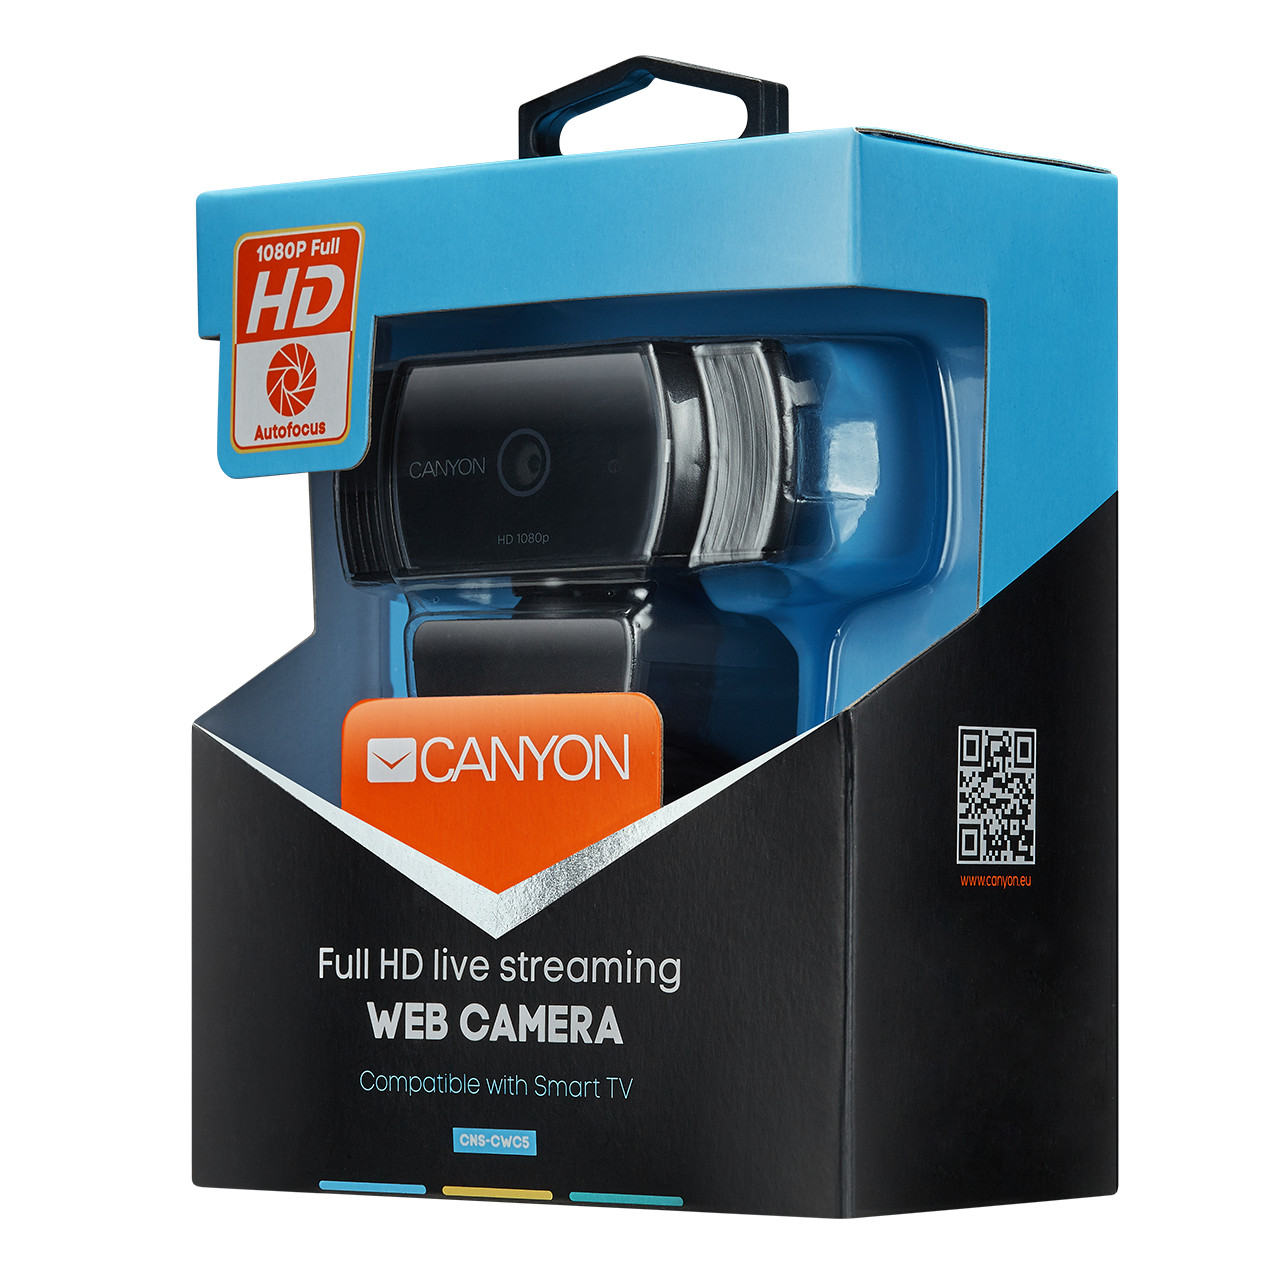 Canyon usb camera driver for mac